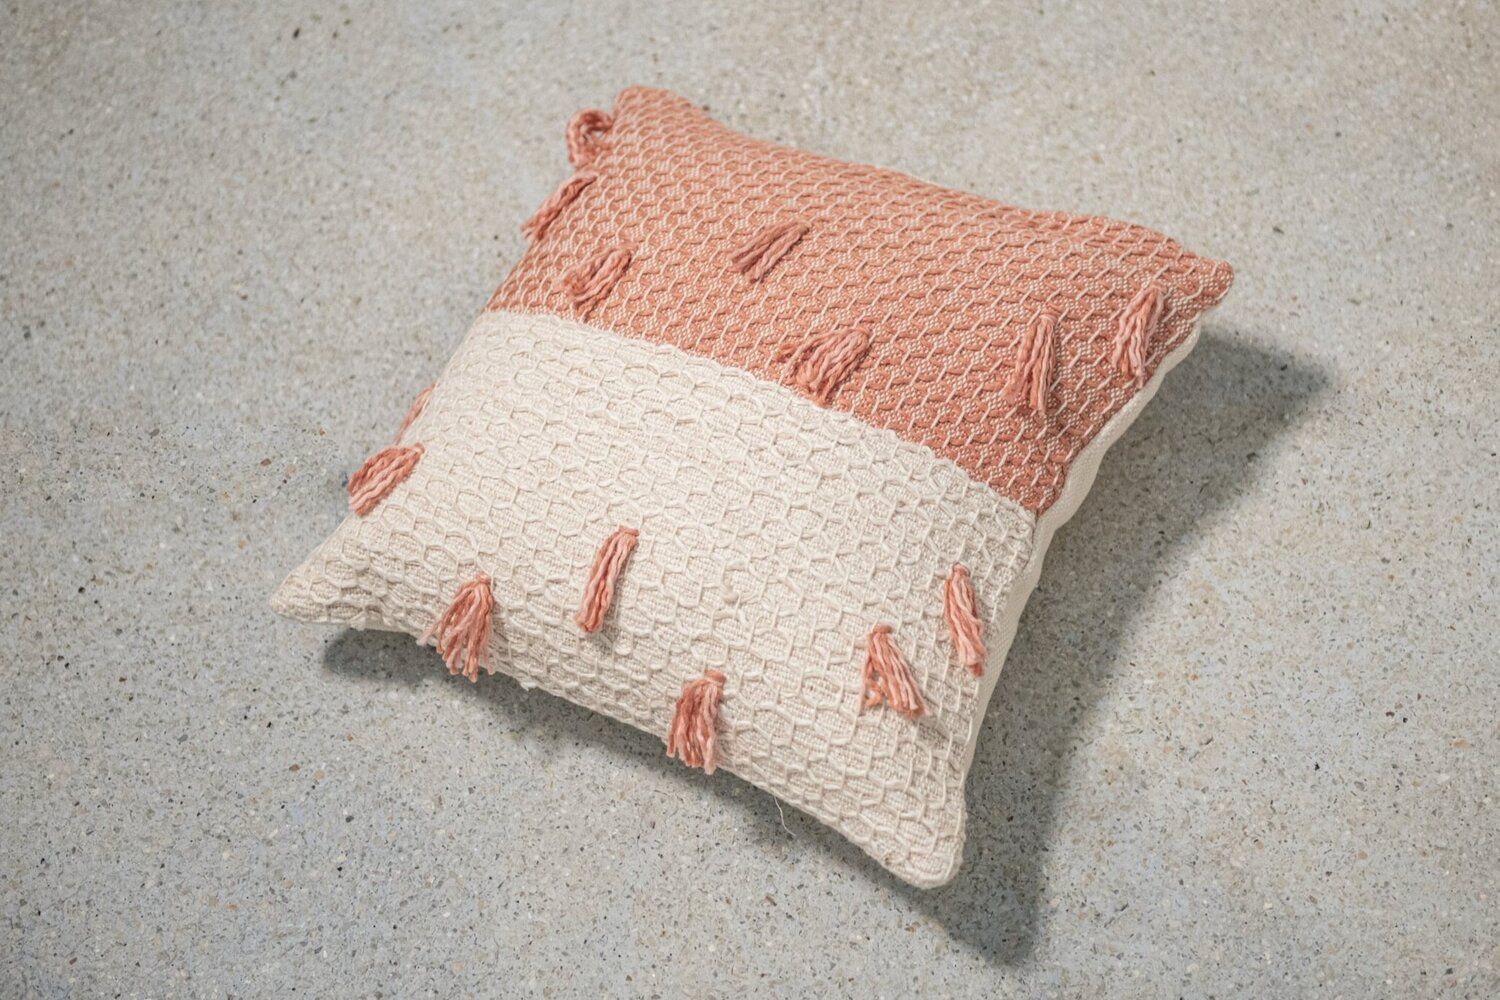 Diamond Guayaba Pink Pillow with Tasselscategory_Decor from Zuahaza - SHOPELEOS